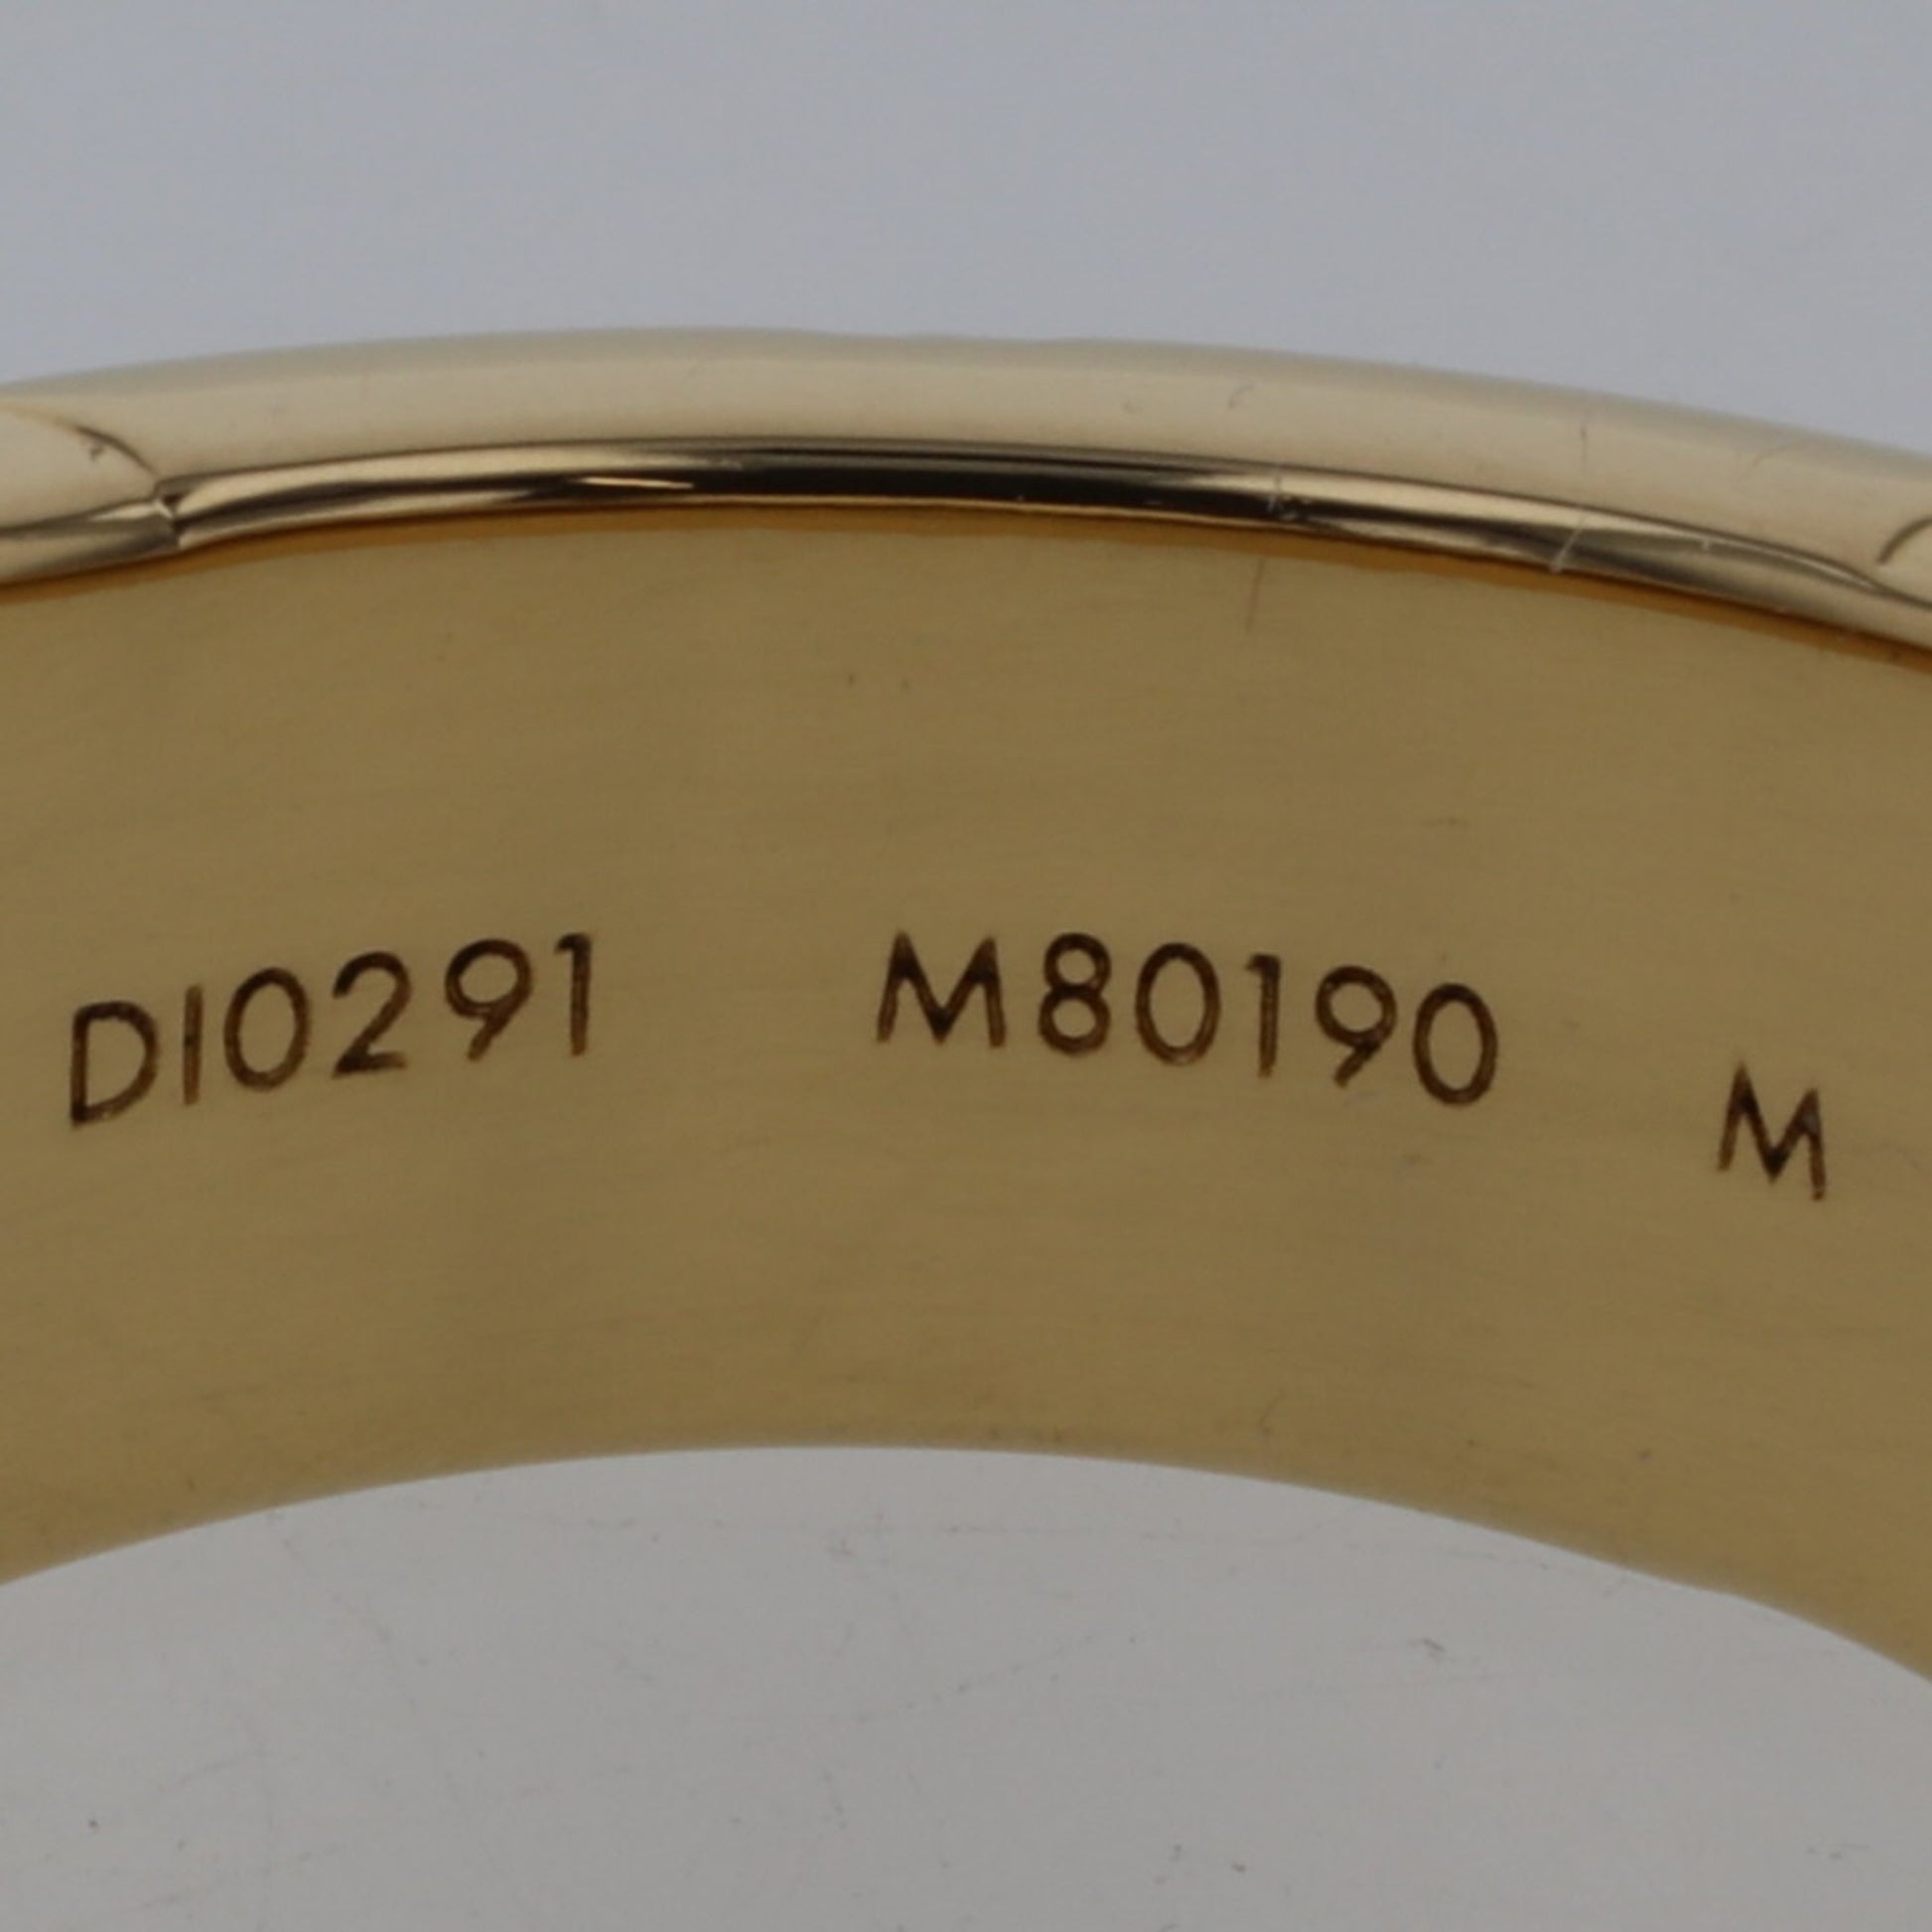 Monogram Signet Ring S00 - Fashion Jewelry M80190